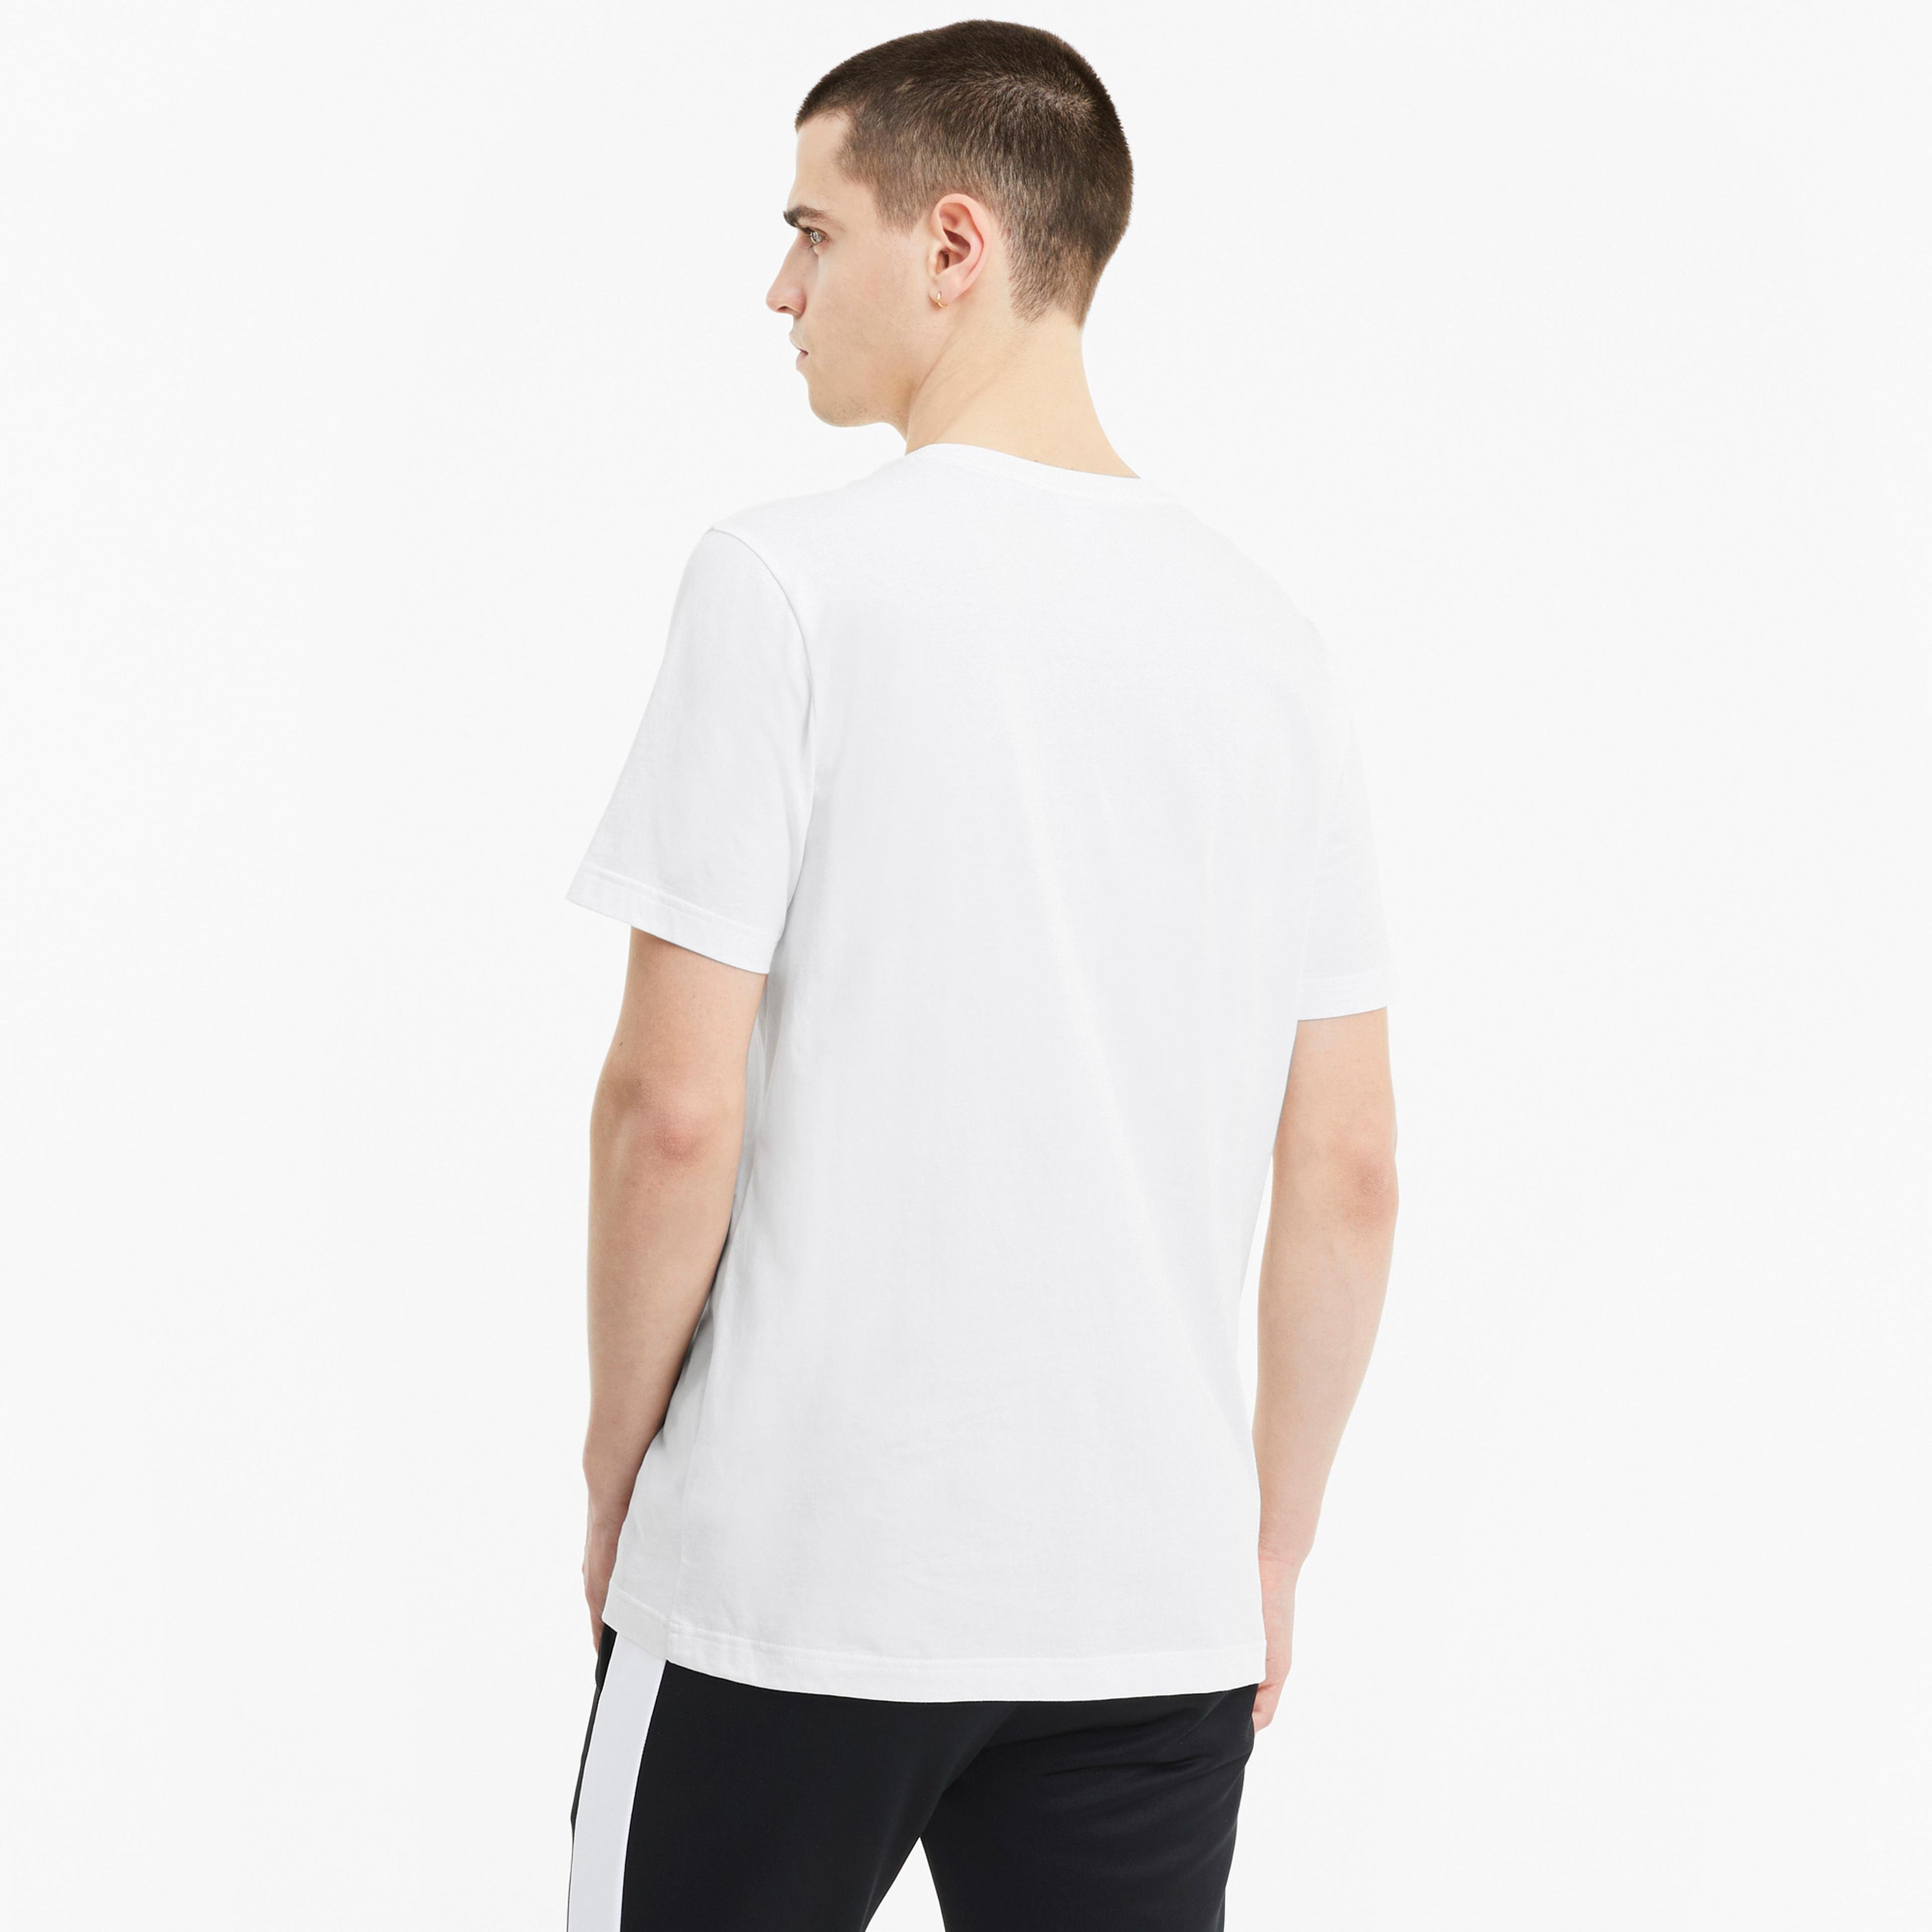 Puma Classics Erkek Beyaz T-Shirt